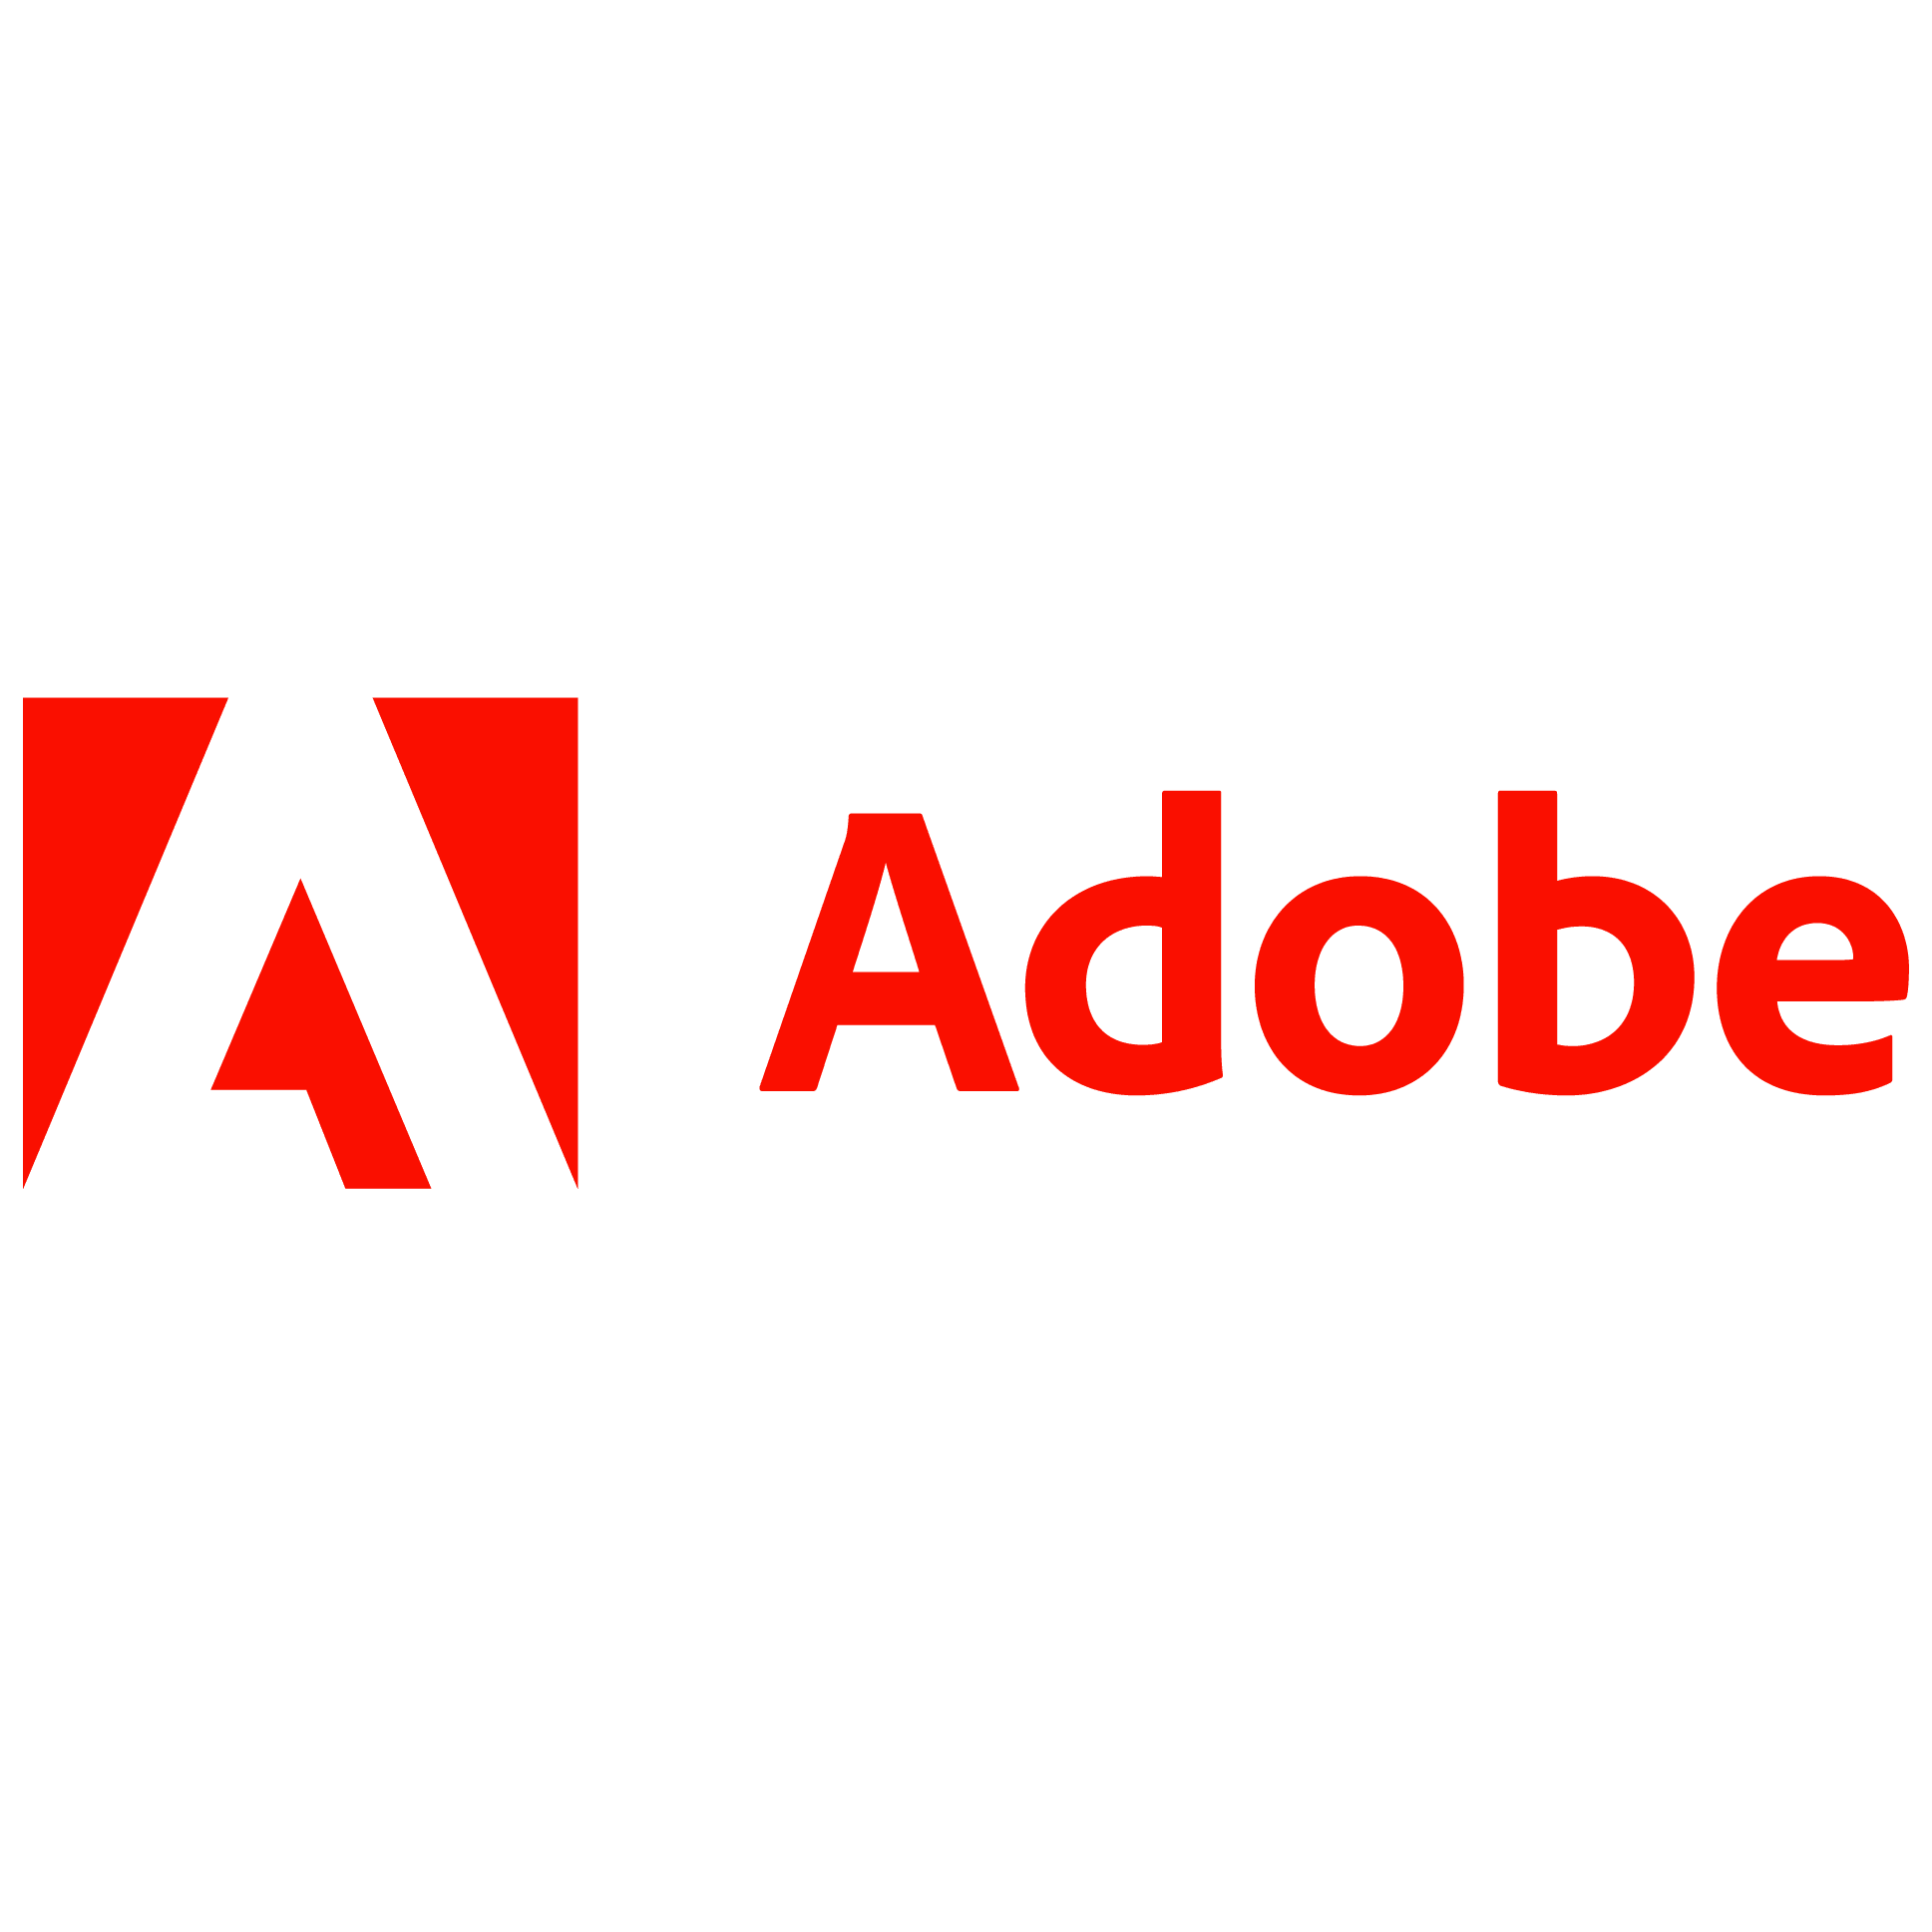 Adobe_square.png